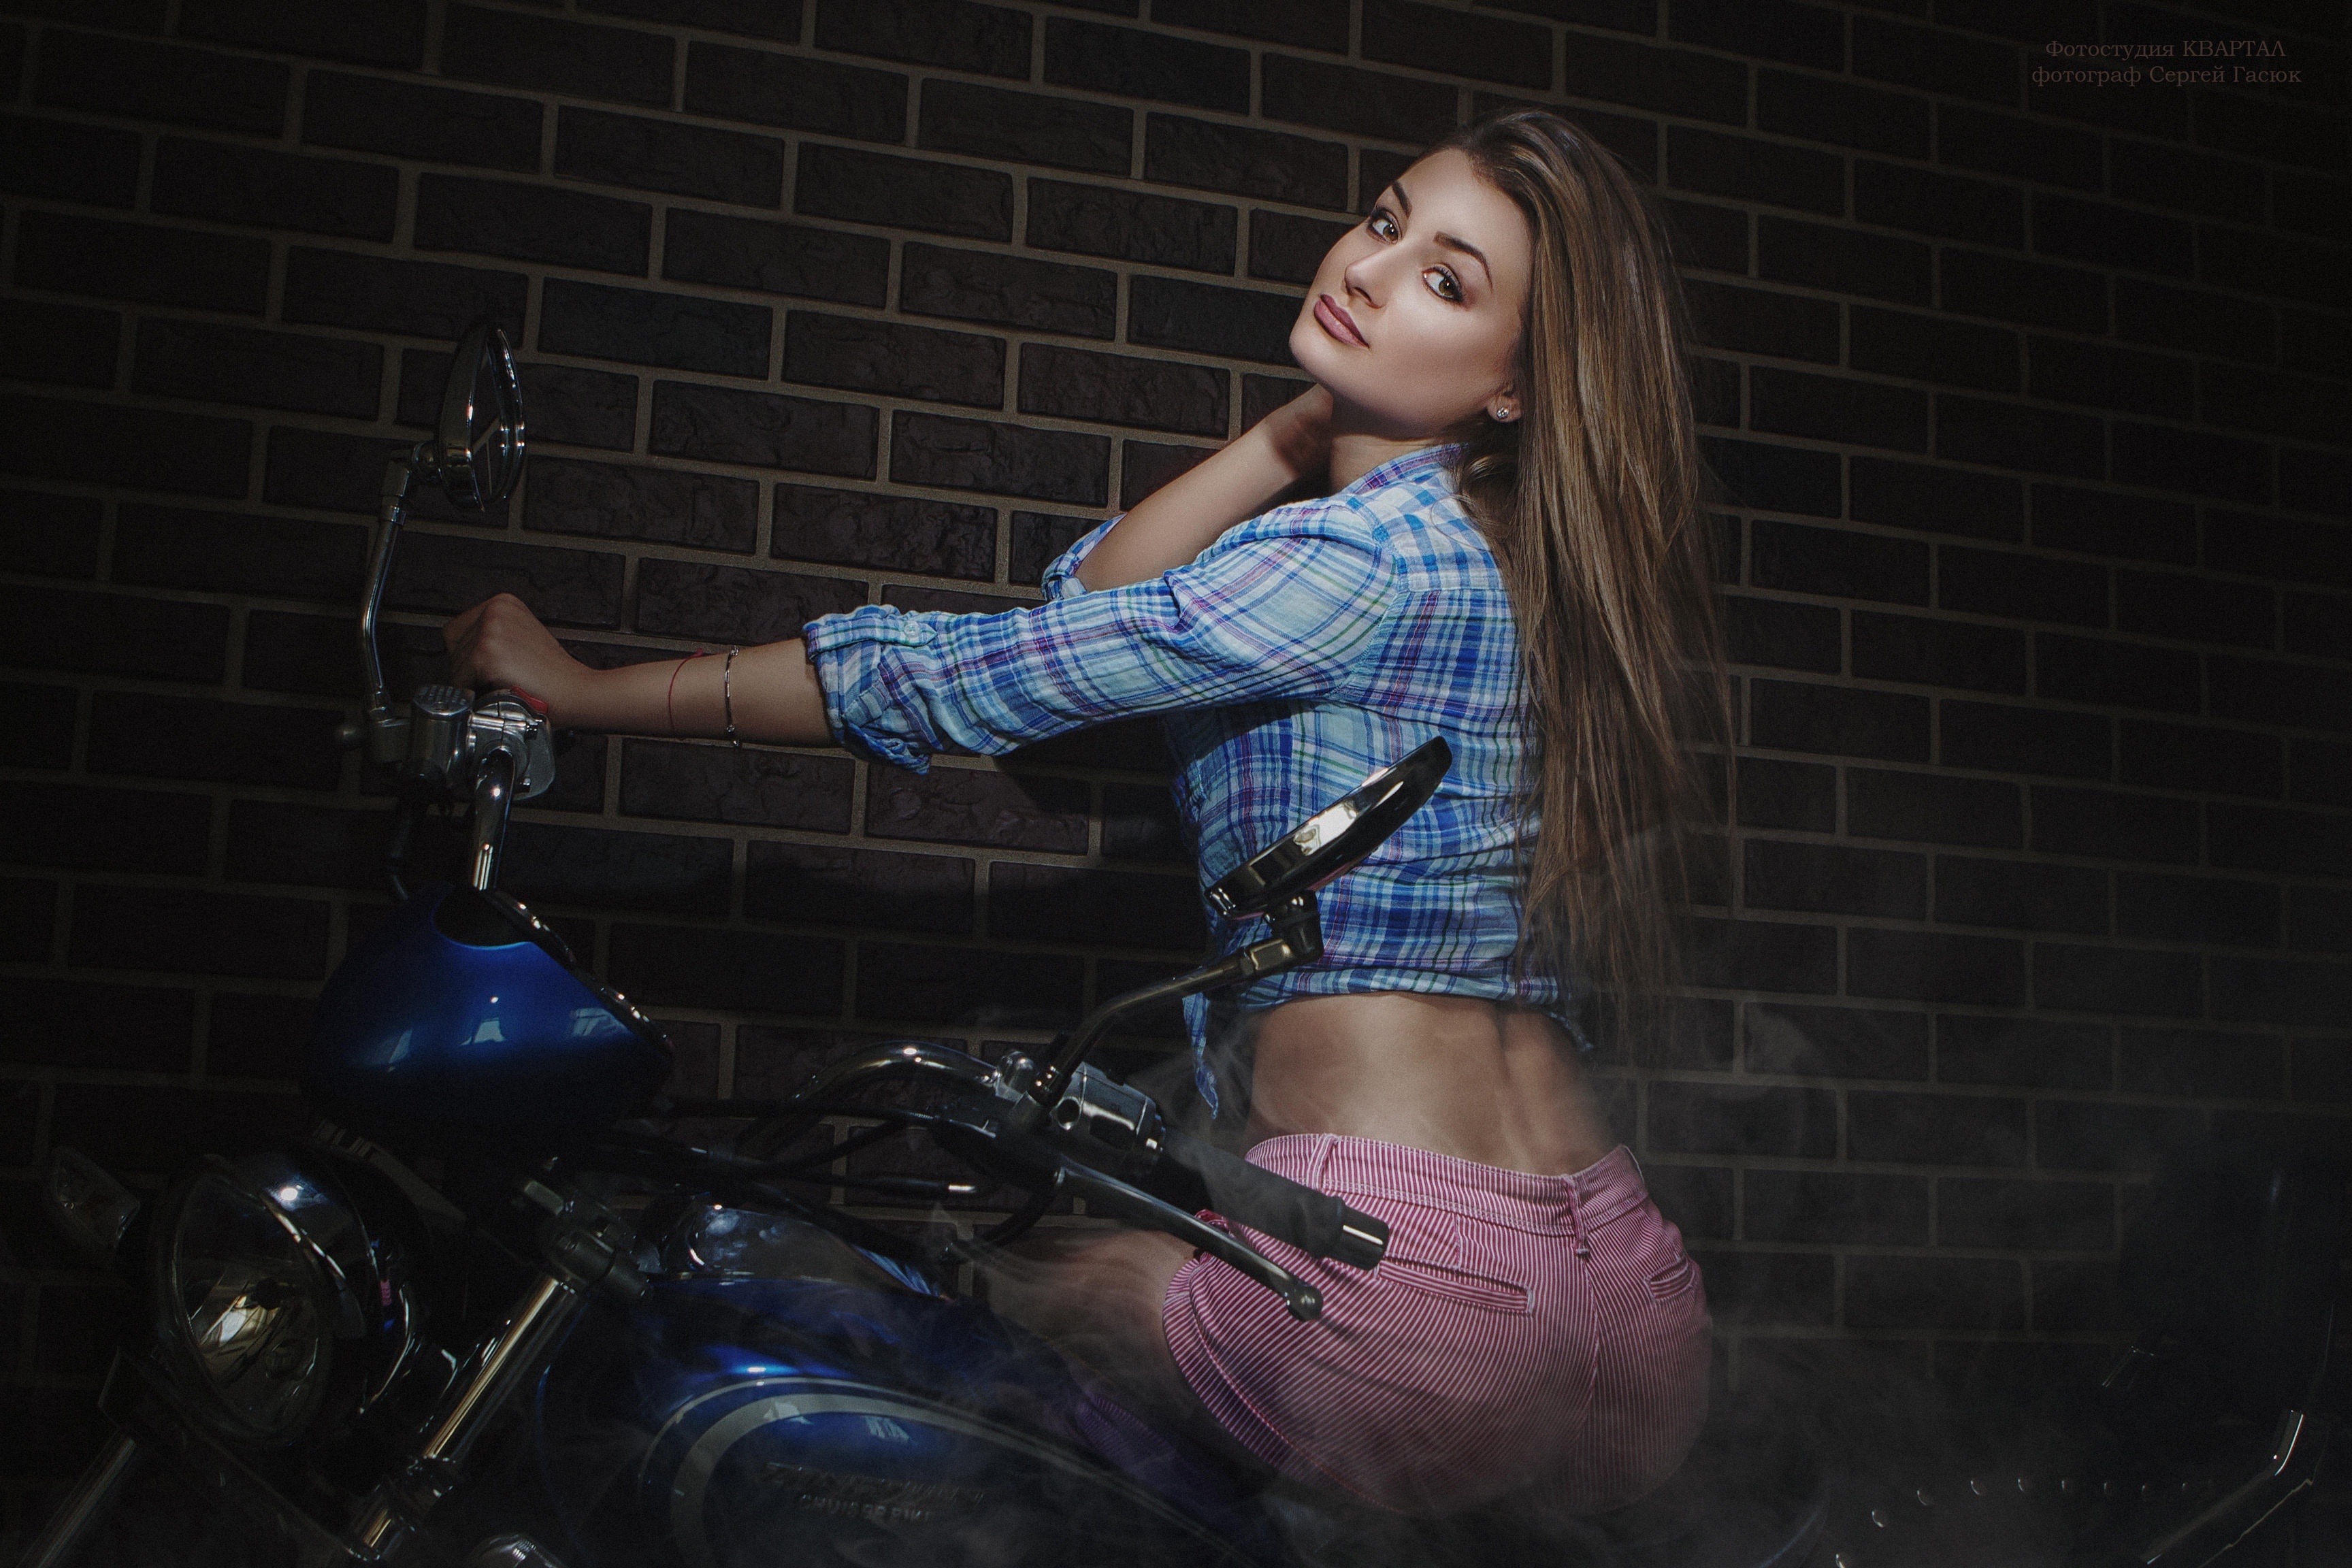 Women Model Vehicle Long Hair Motorcycle Shirt Sitting Women With Bikes Plaid Shirt Looking Over Sho 3456x2304